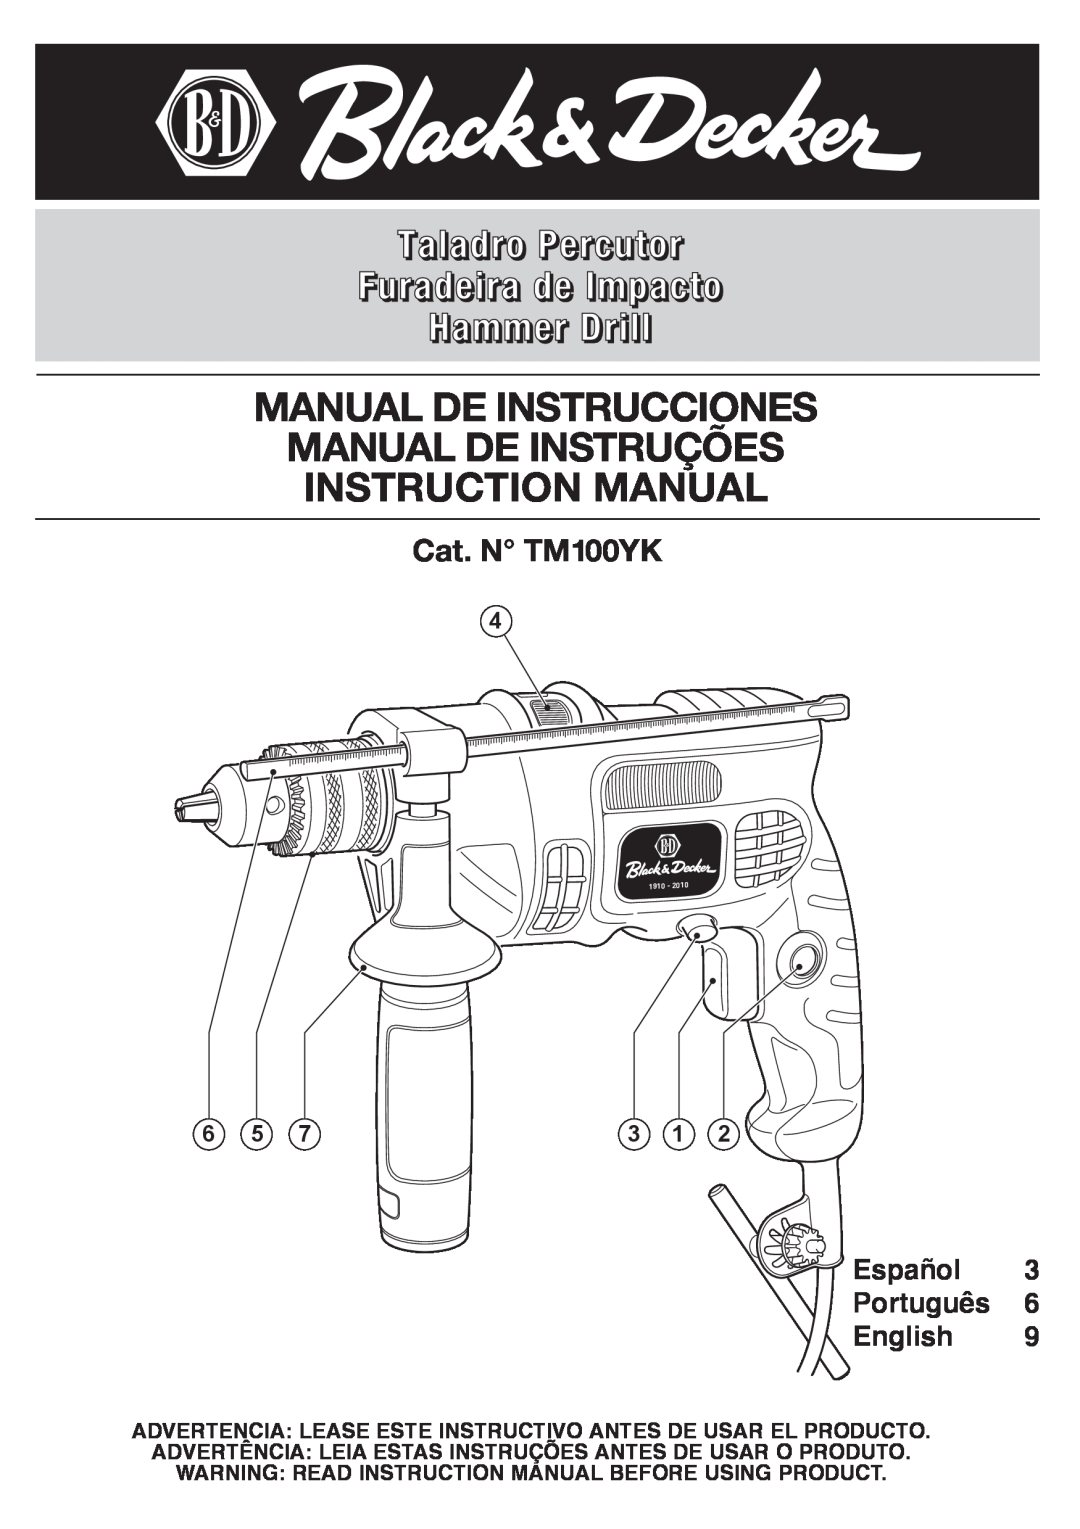 Black & Decker TM100YK-BR instruction manual Manual De Instrucciones Manual De Instruções Instruction Manual, Español 